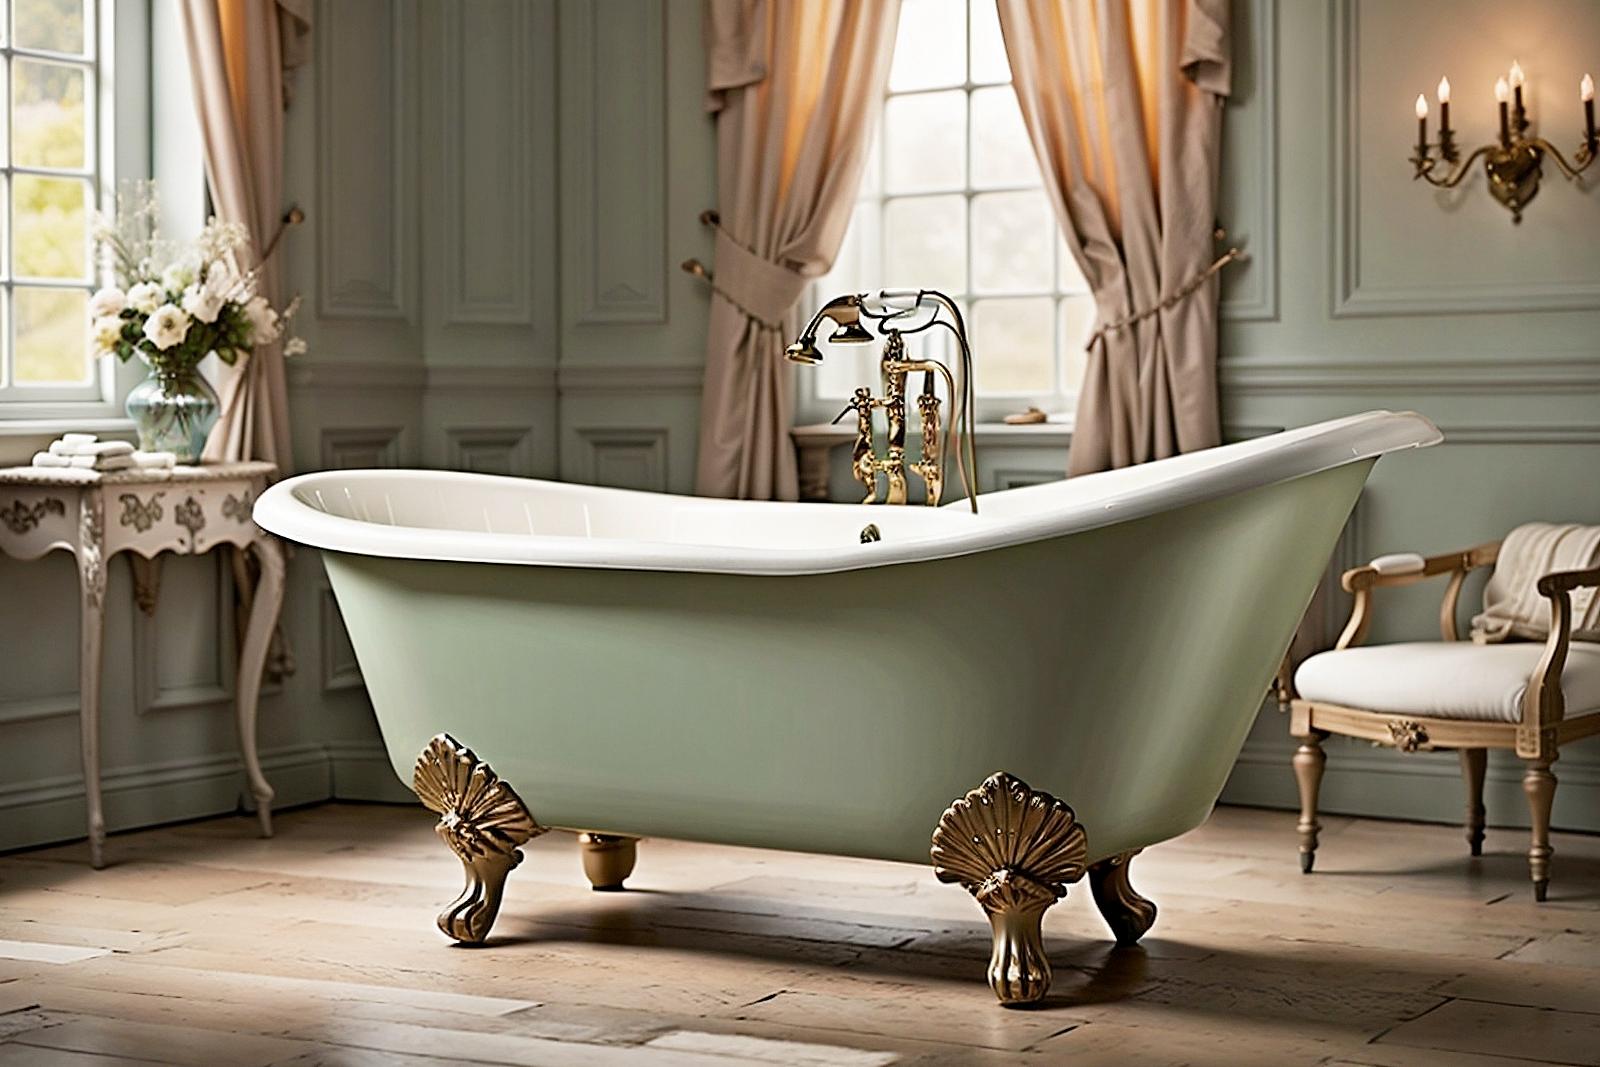 Vintage-style freestanding bathtub